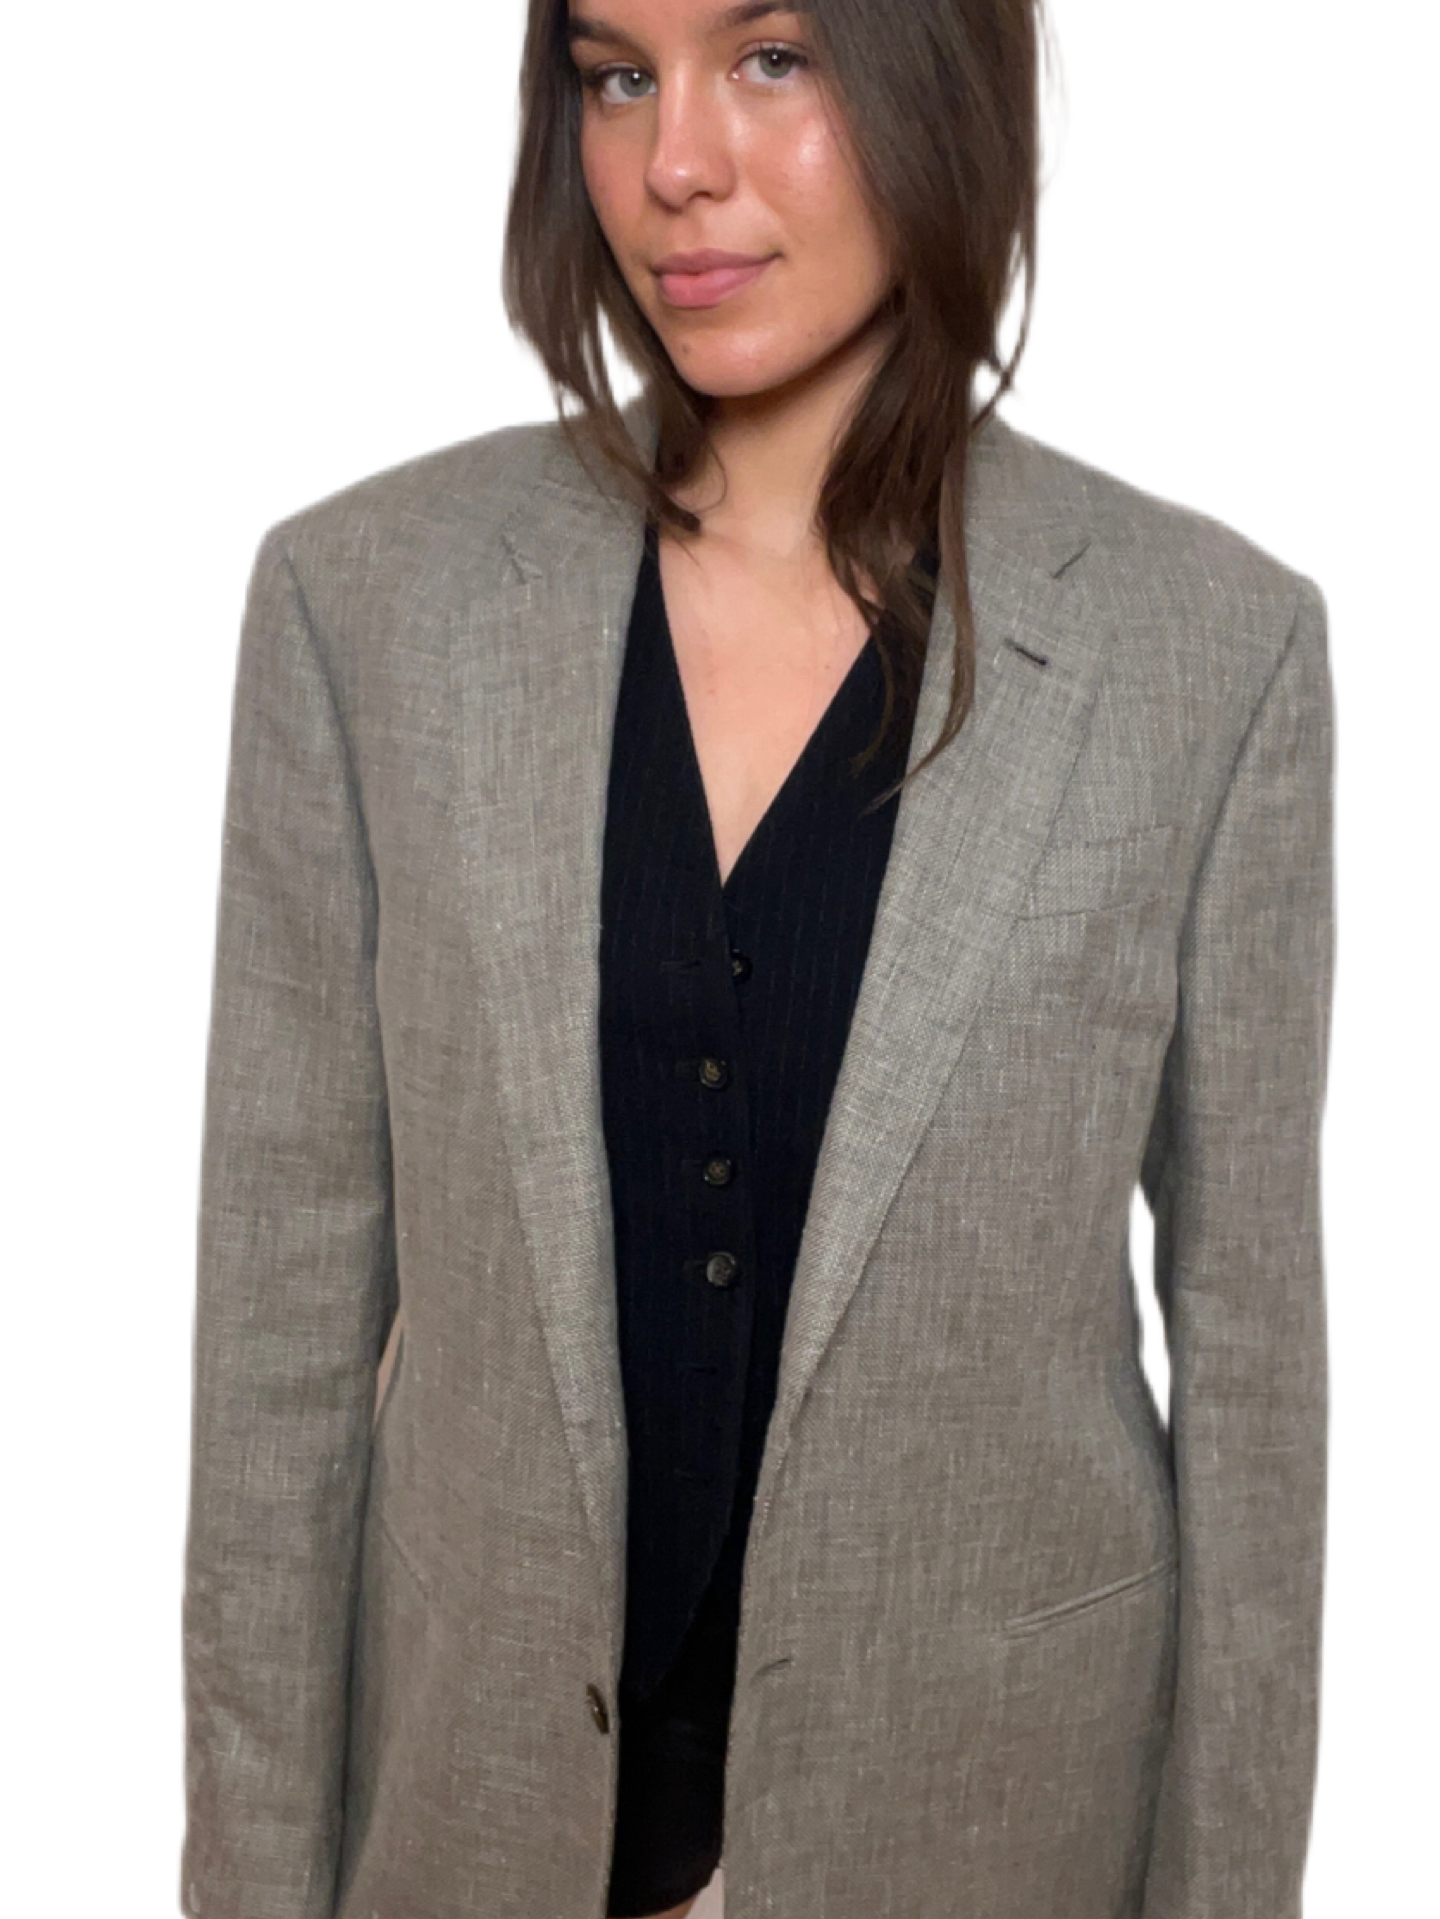 Armani Grey Unisex Suit Jacket. Size: IT52